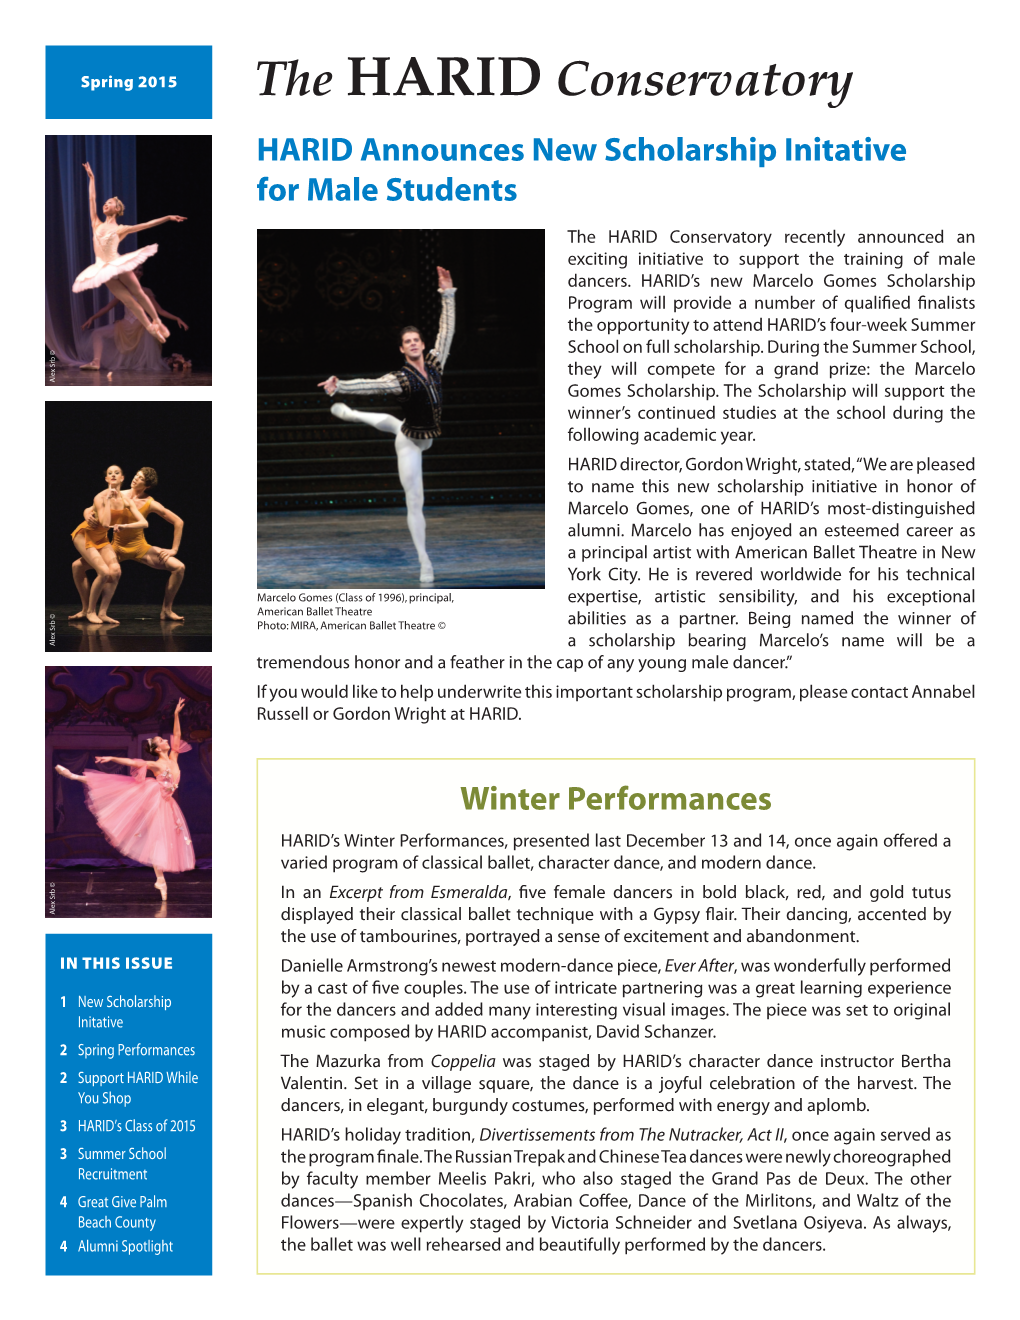 HARID Announces New Scholarship Initative for Male Students Winter